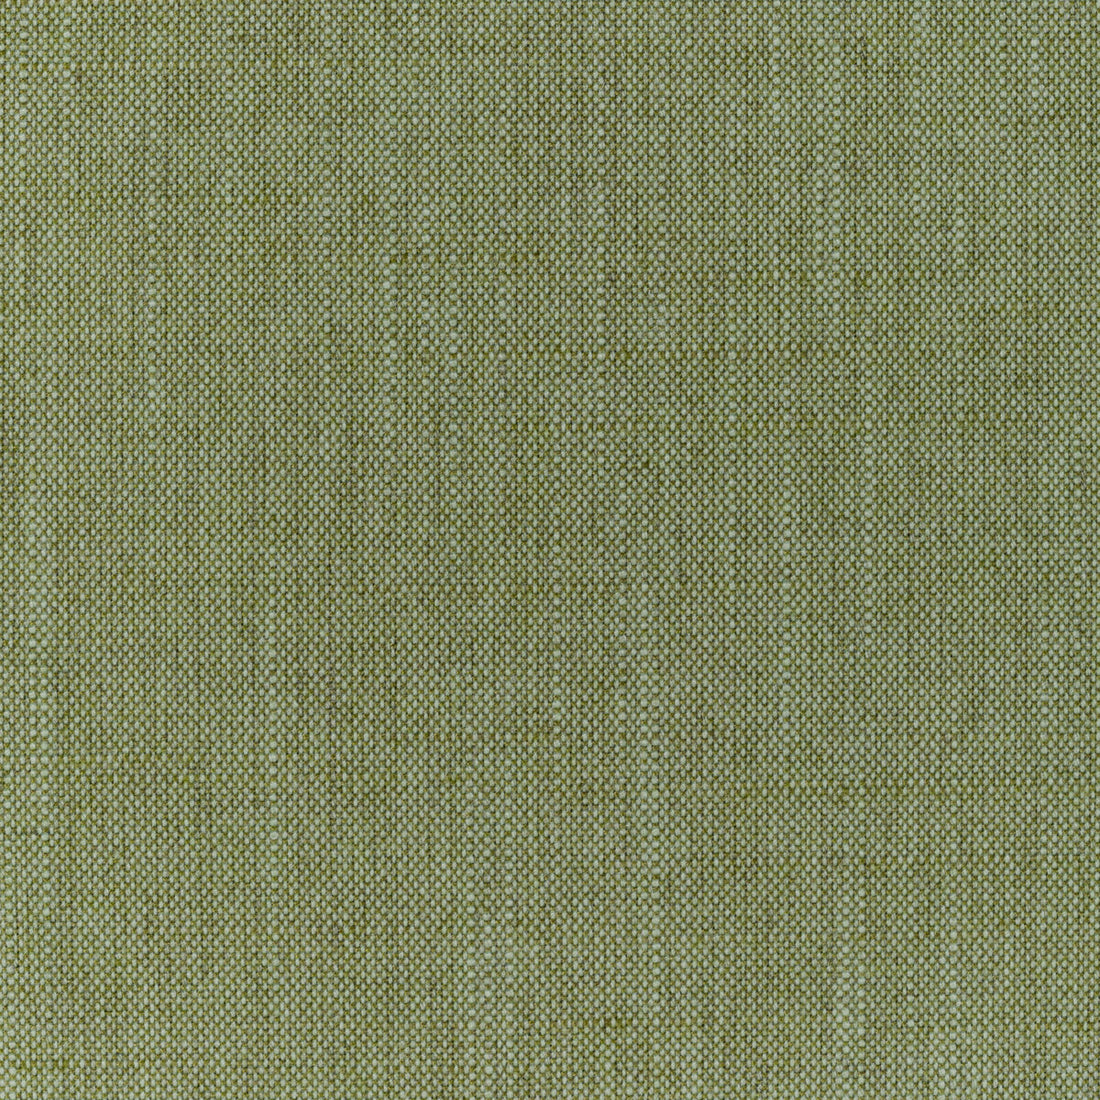 Kravet Smart fabric in 36112-23 color - pattern 36112.23.0 - by Kravet Smart in the Performance Kravetarmor collection